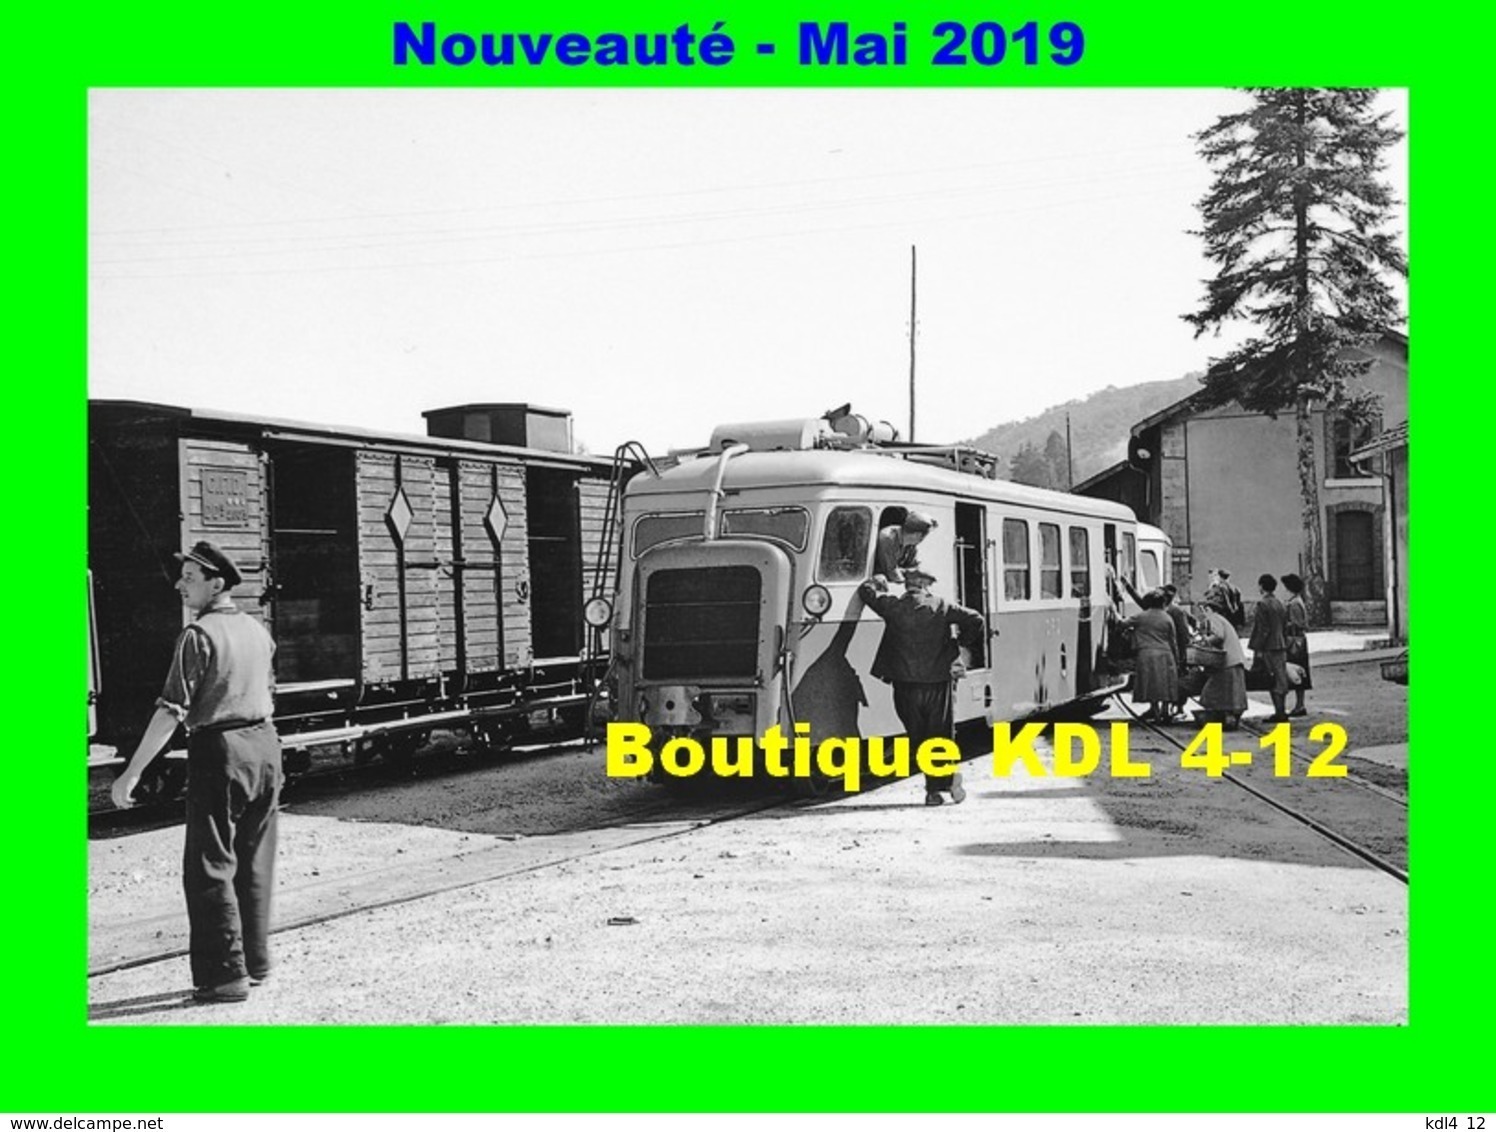 AL 565 - Autorail Billard A 150 D En Gare - LAMASTRE - Ardèche - CFD Vivarais - Lamastre